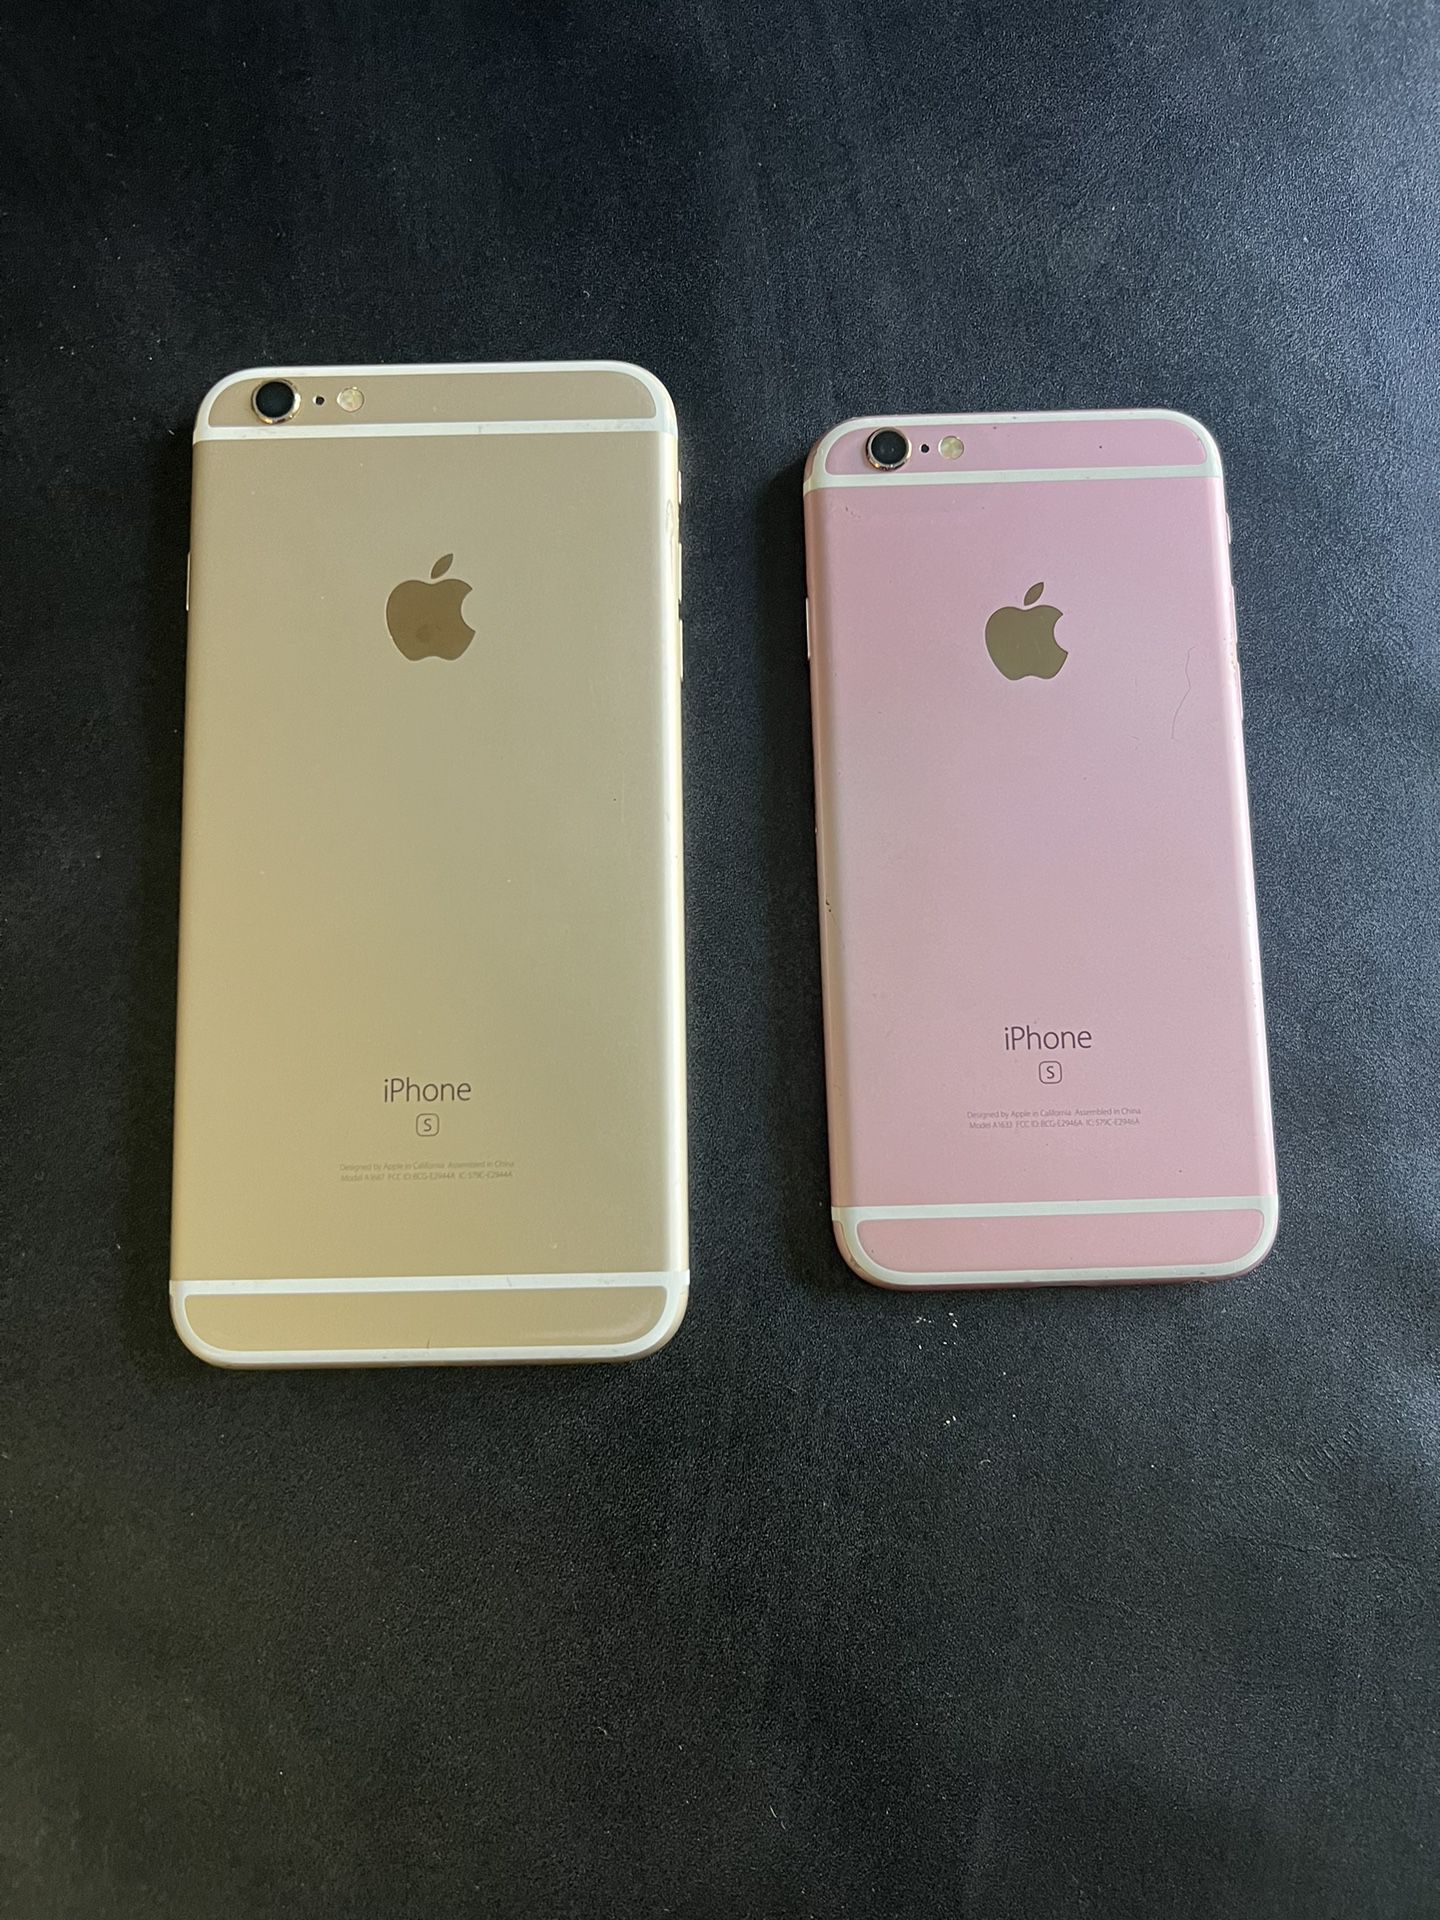 Apple Iphone 6s bundle 